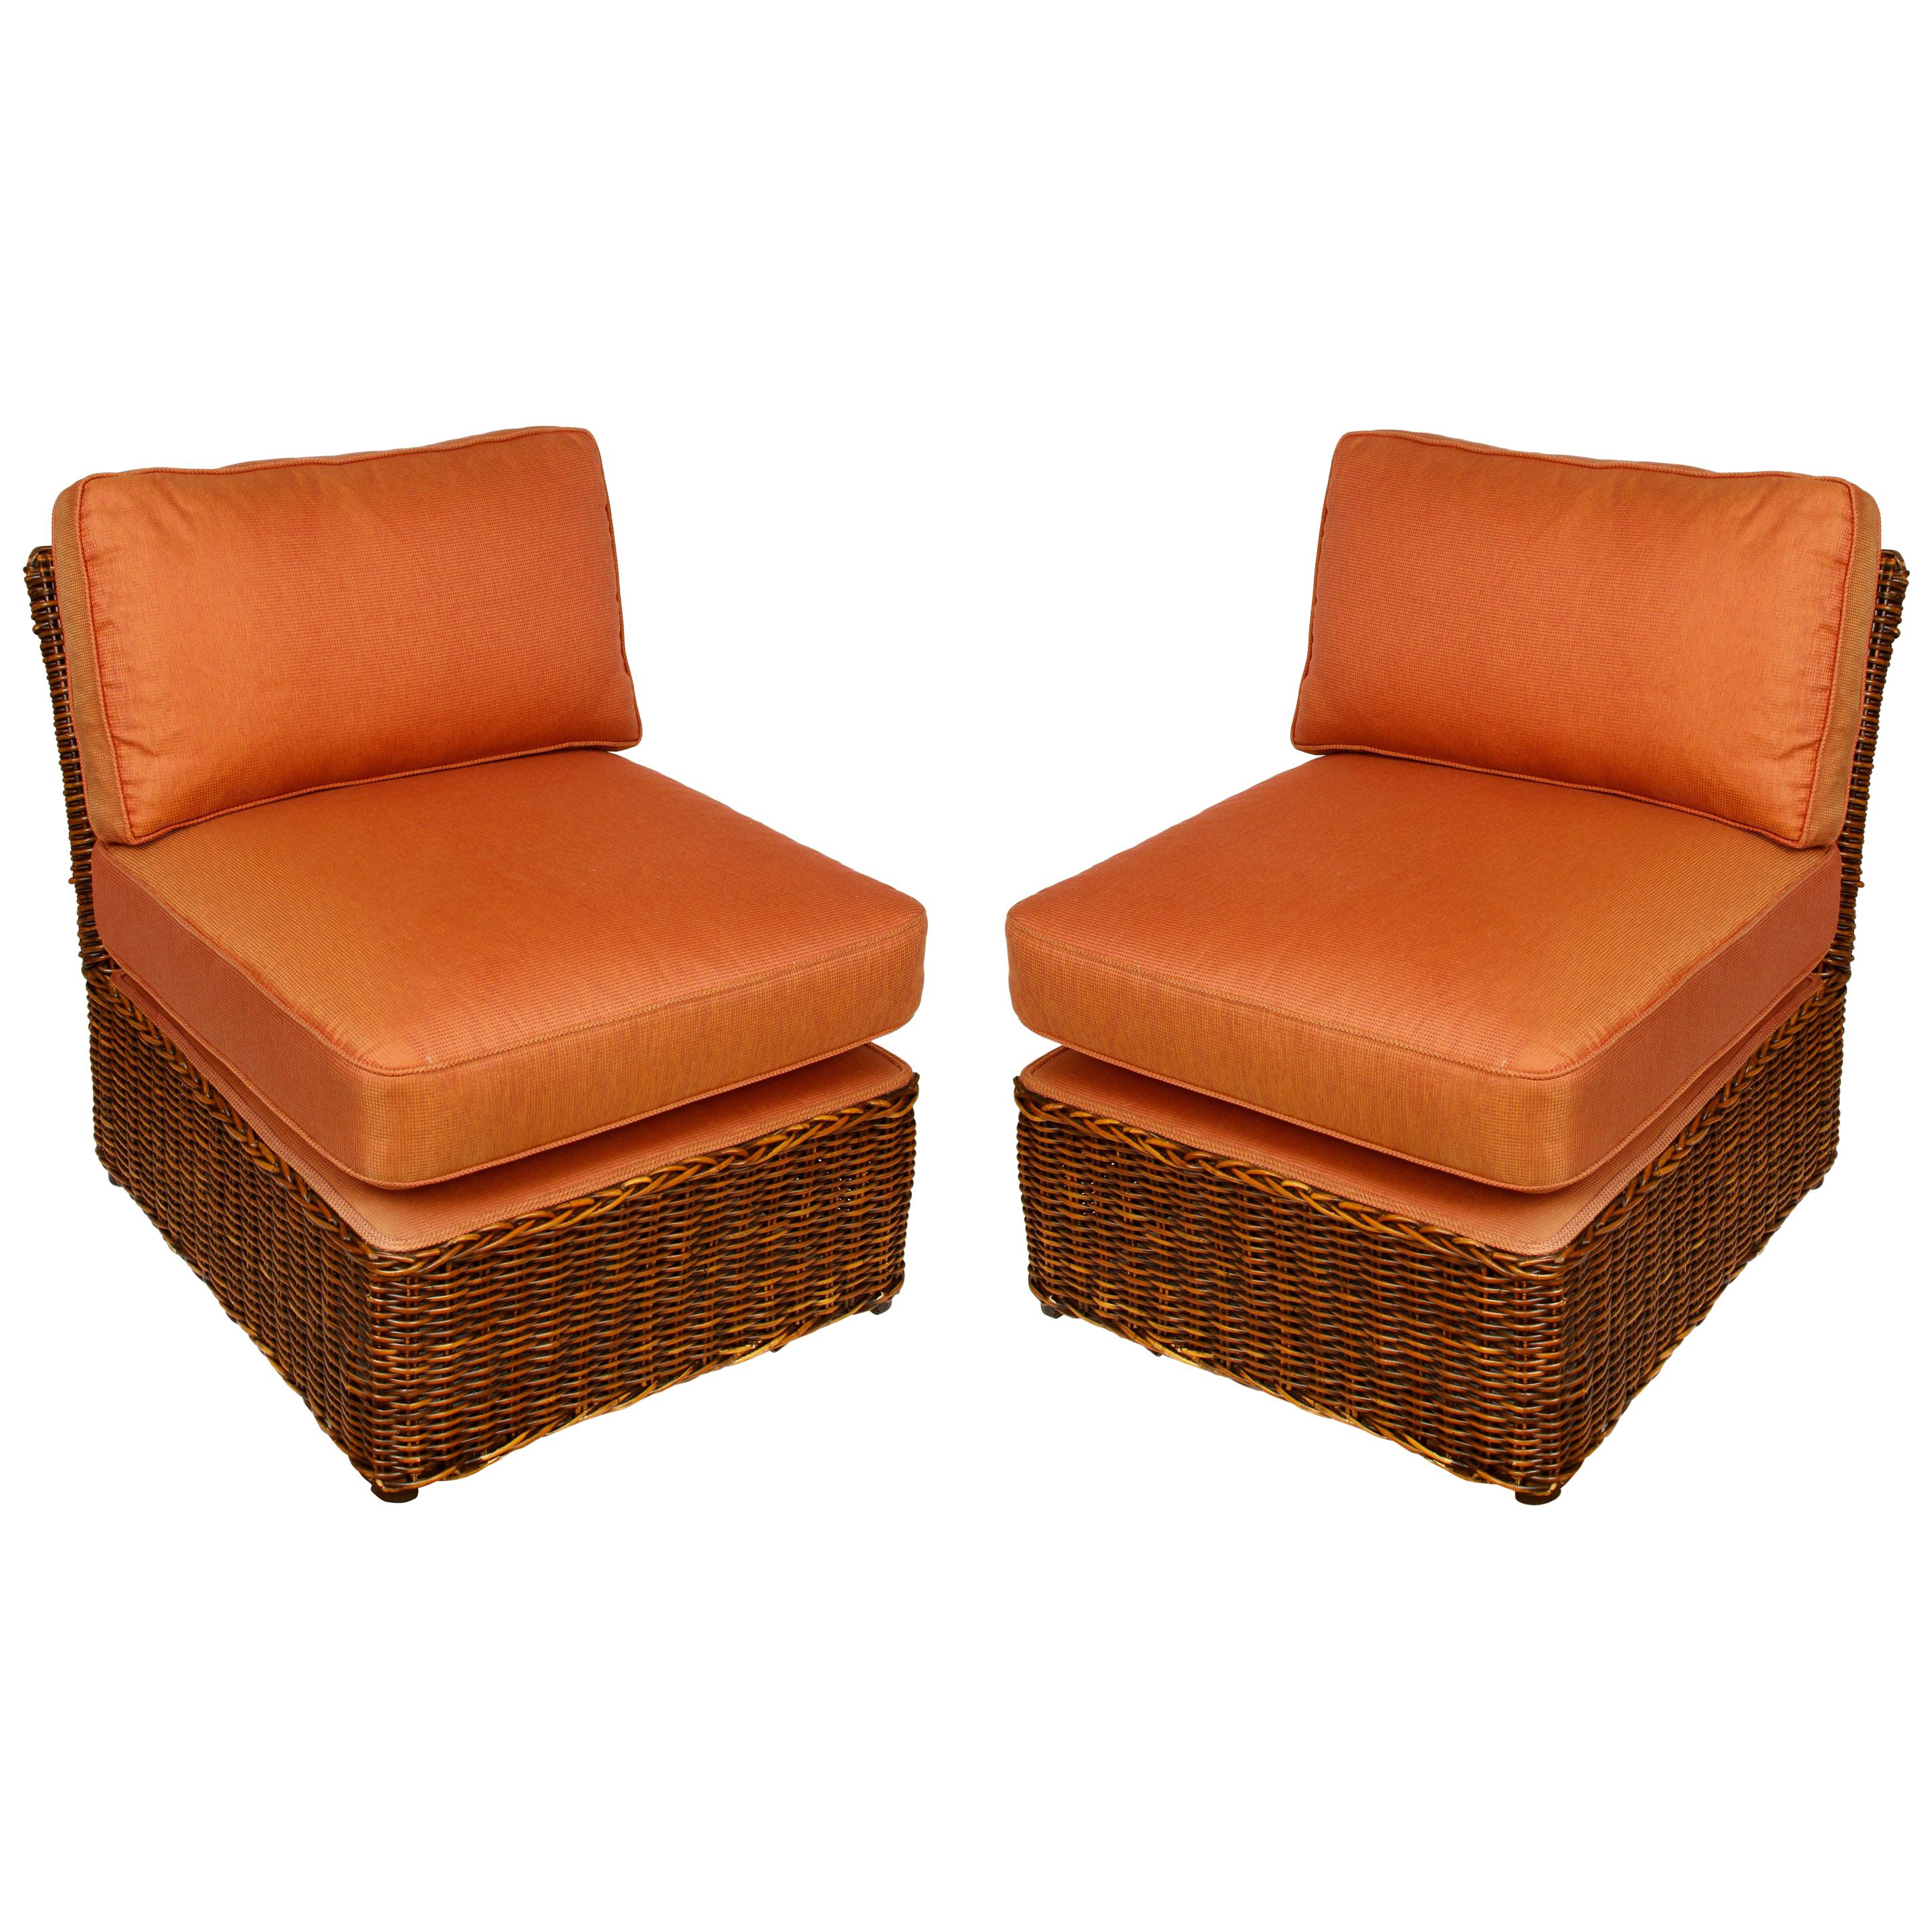 Pair of Vintage Wicker Slipper Chairs